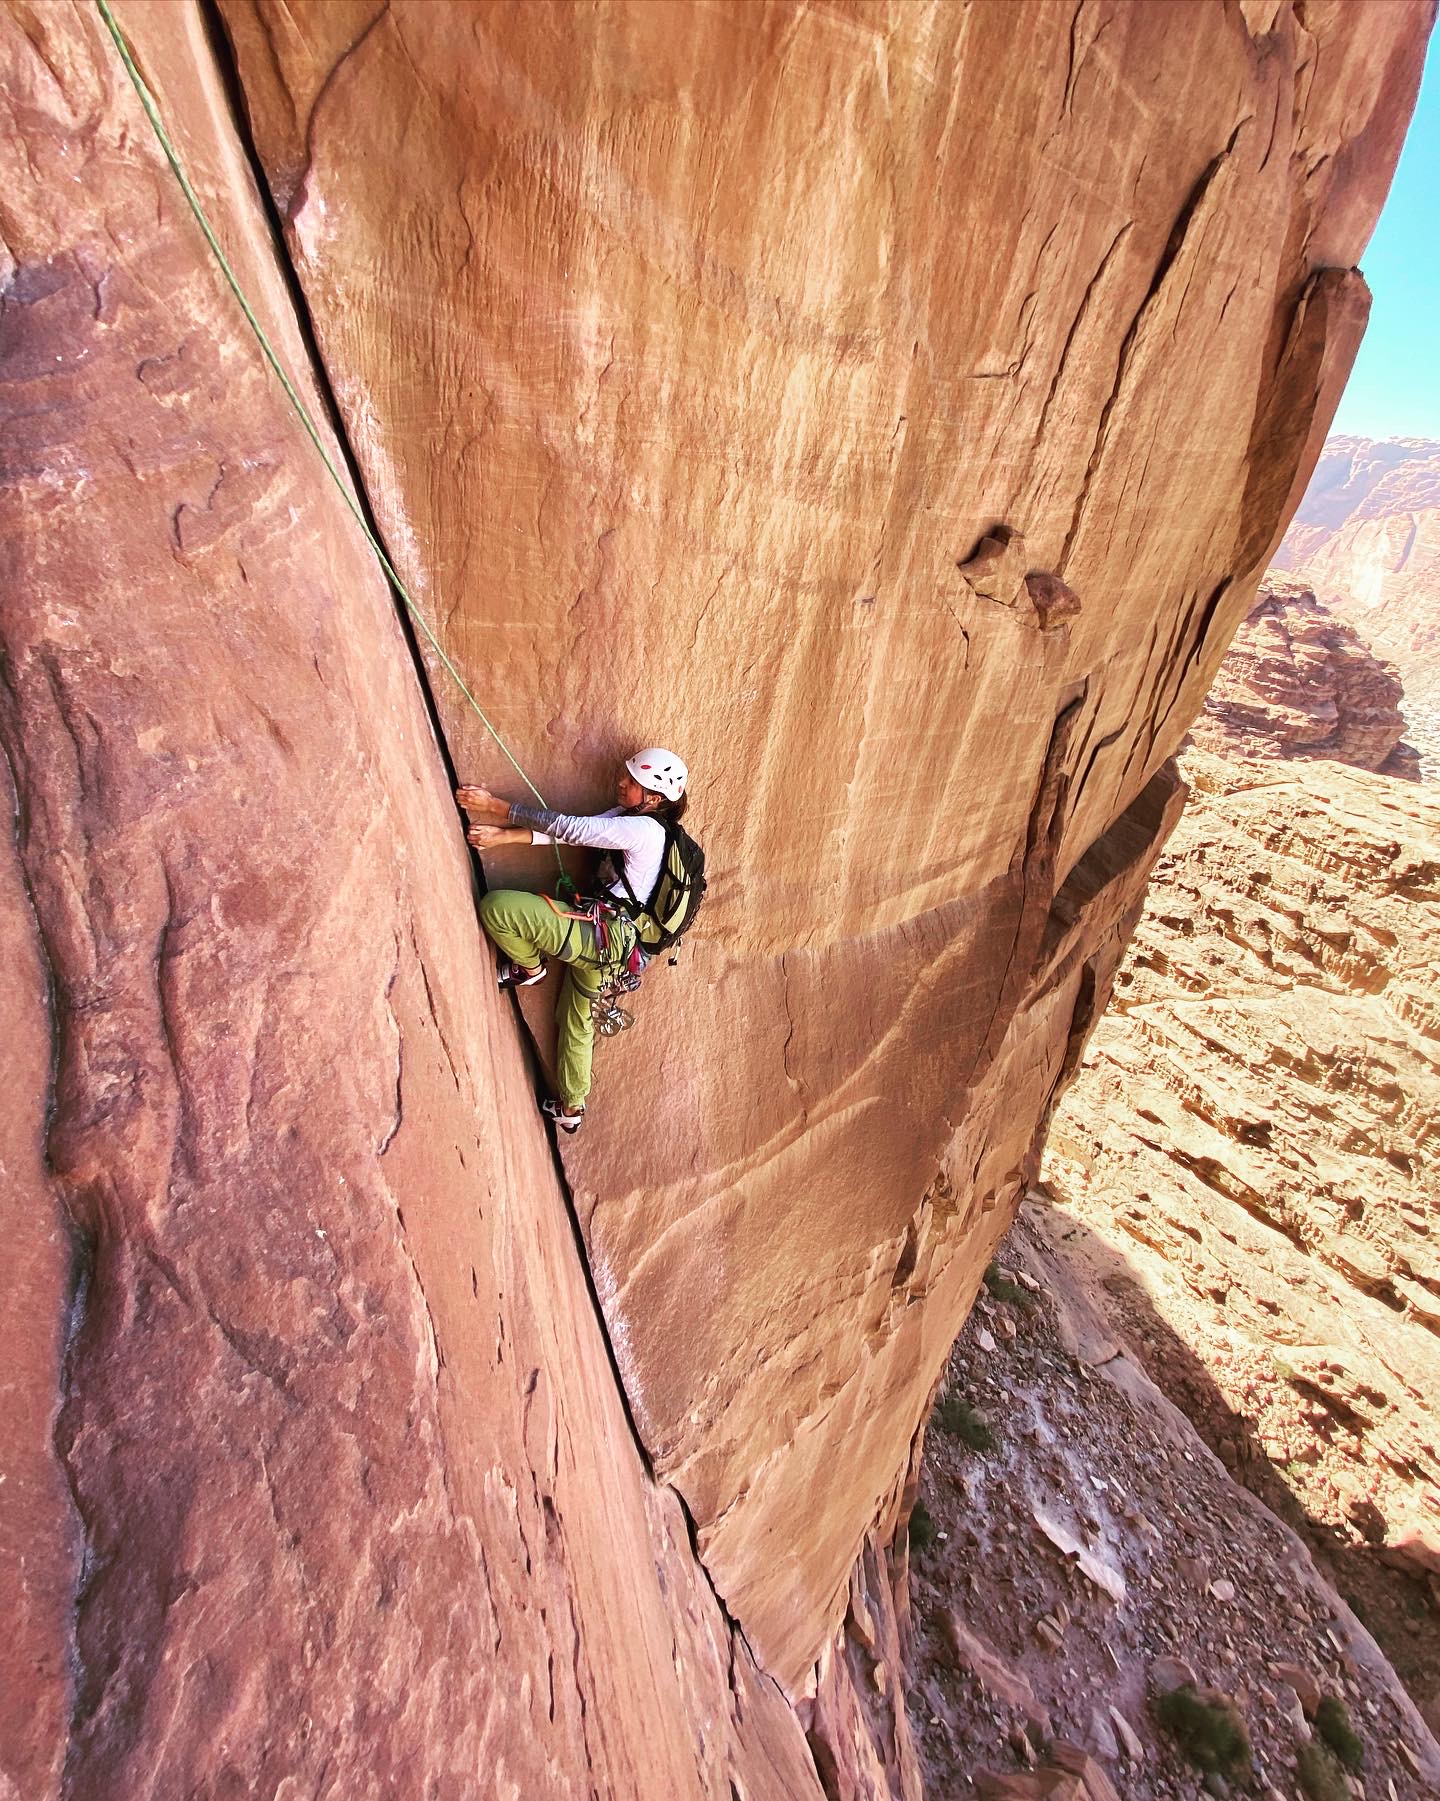 Jordan climbing